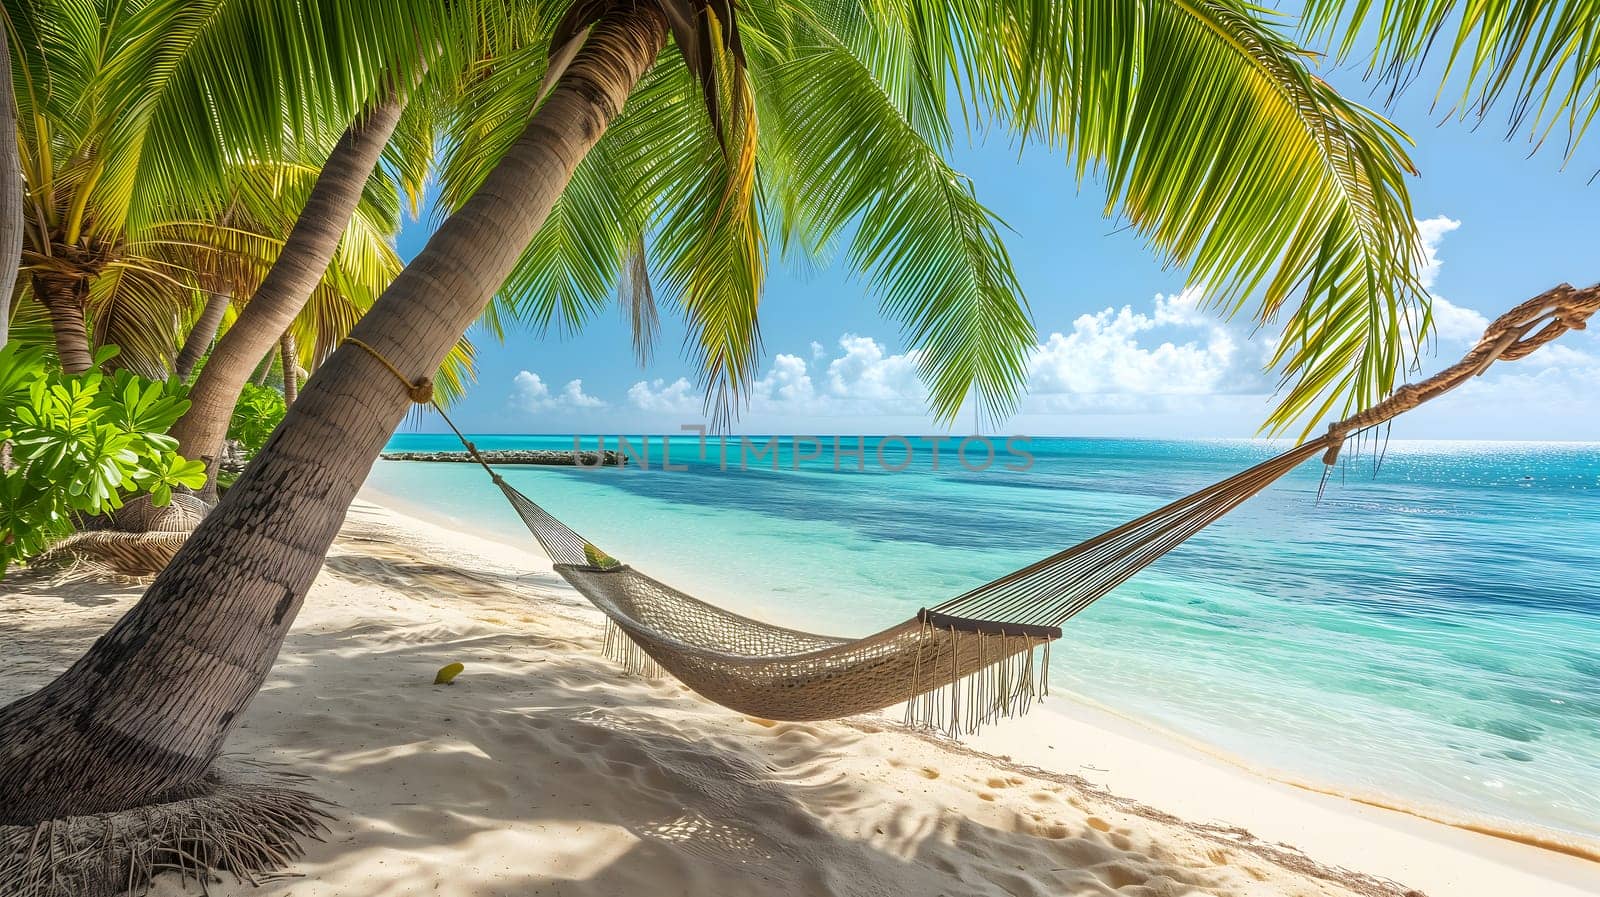 hammock under palm tree in tropical paradise beach by z1b